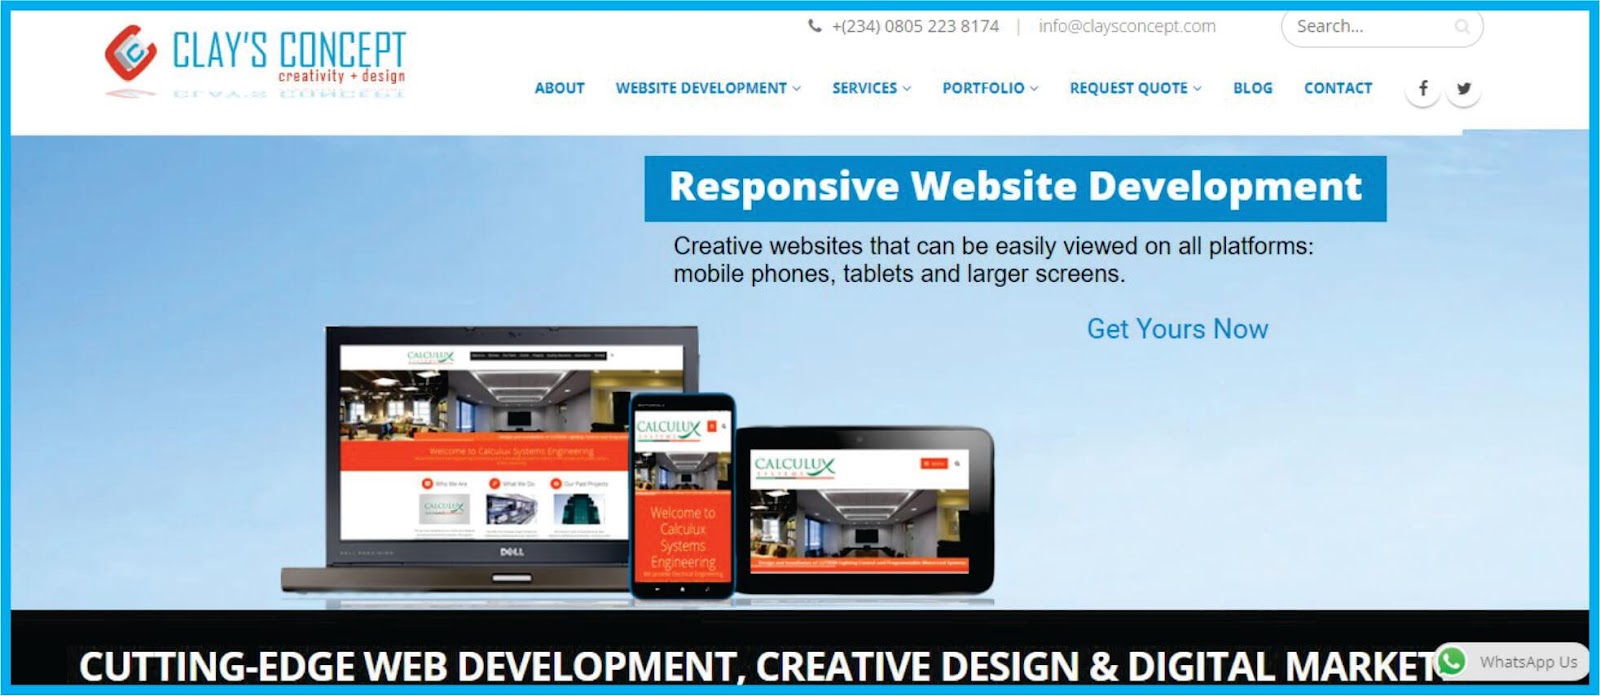 Clay's concept web design company Lagos